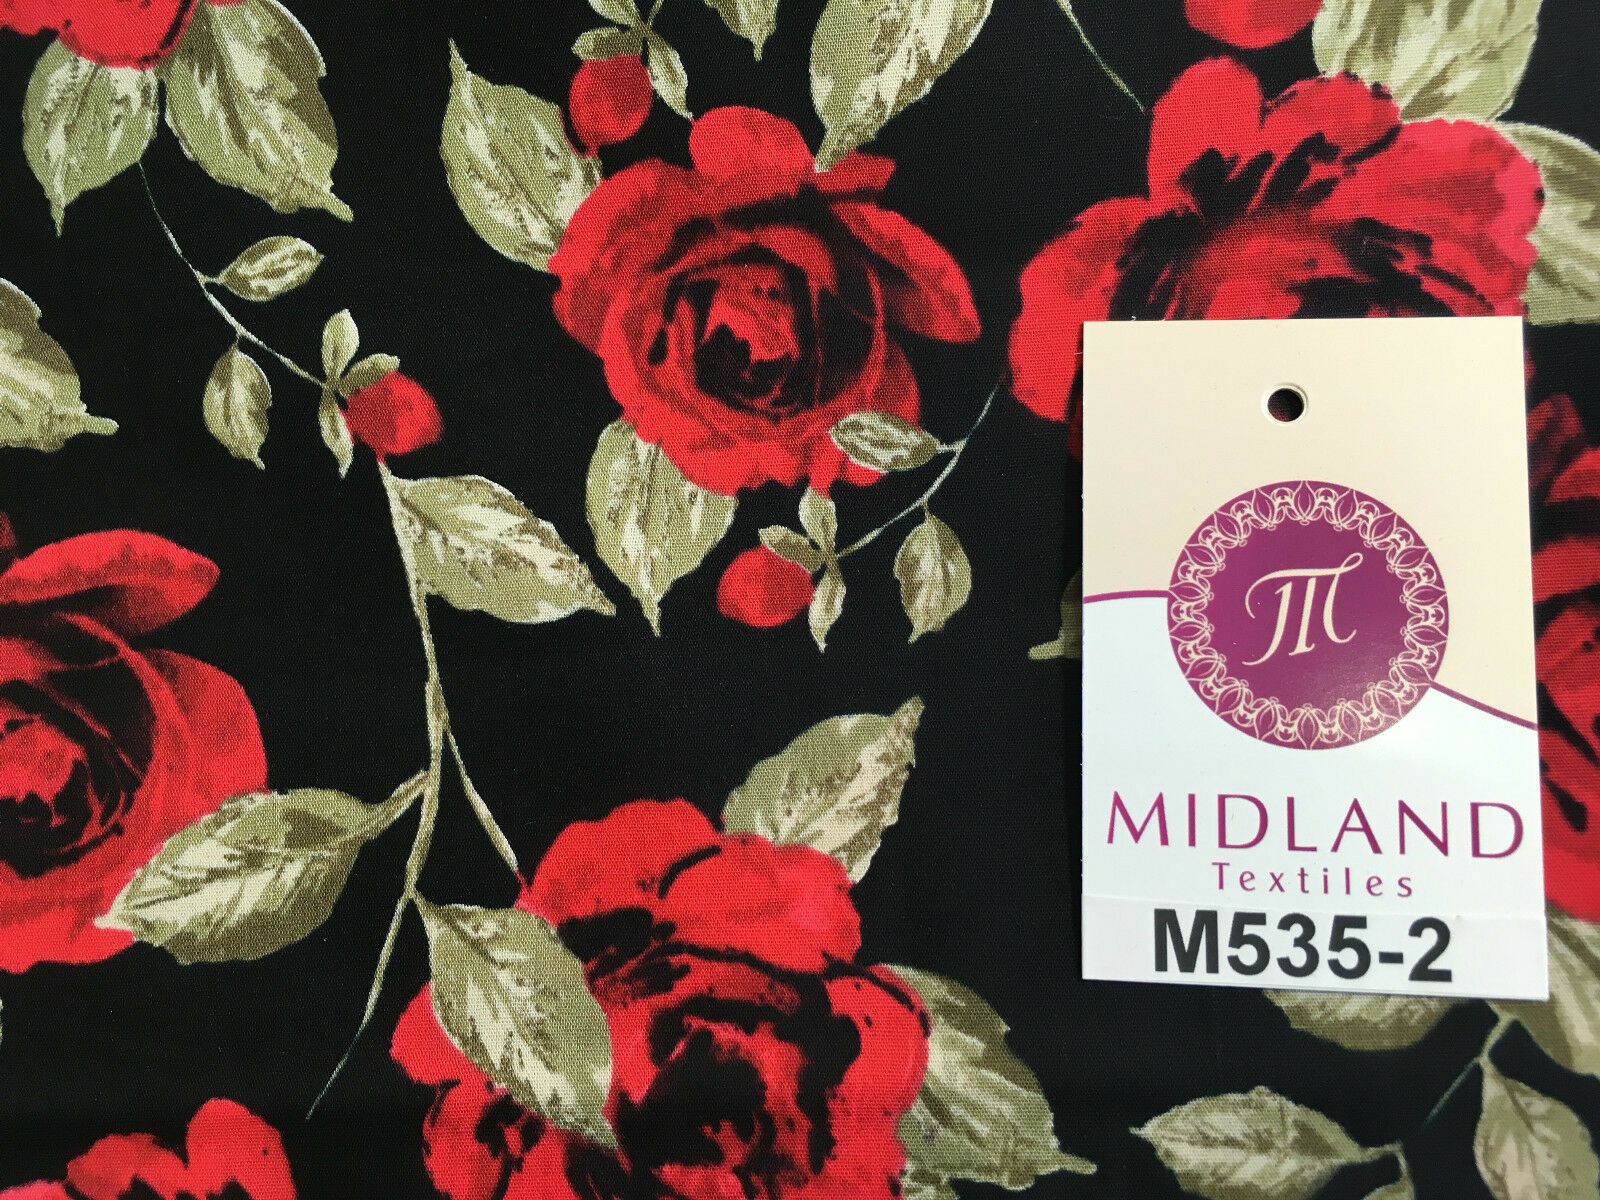 Vintage floral shabby chic rose printed 100% Cotton Poplin fabric 58" M535 Mtex